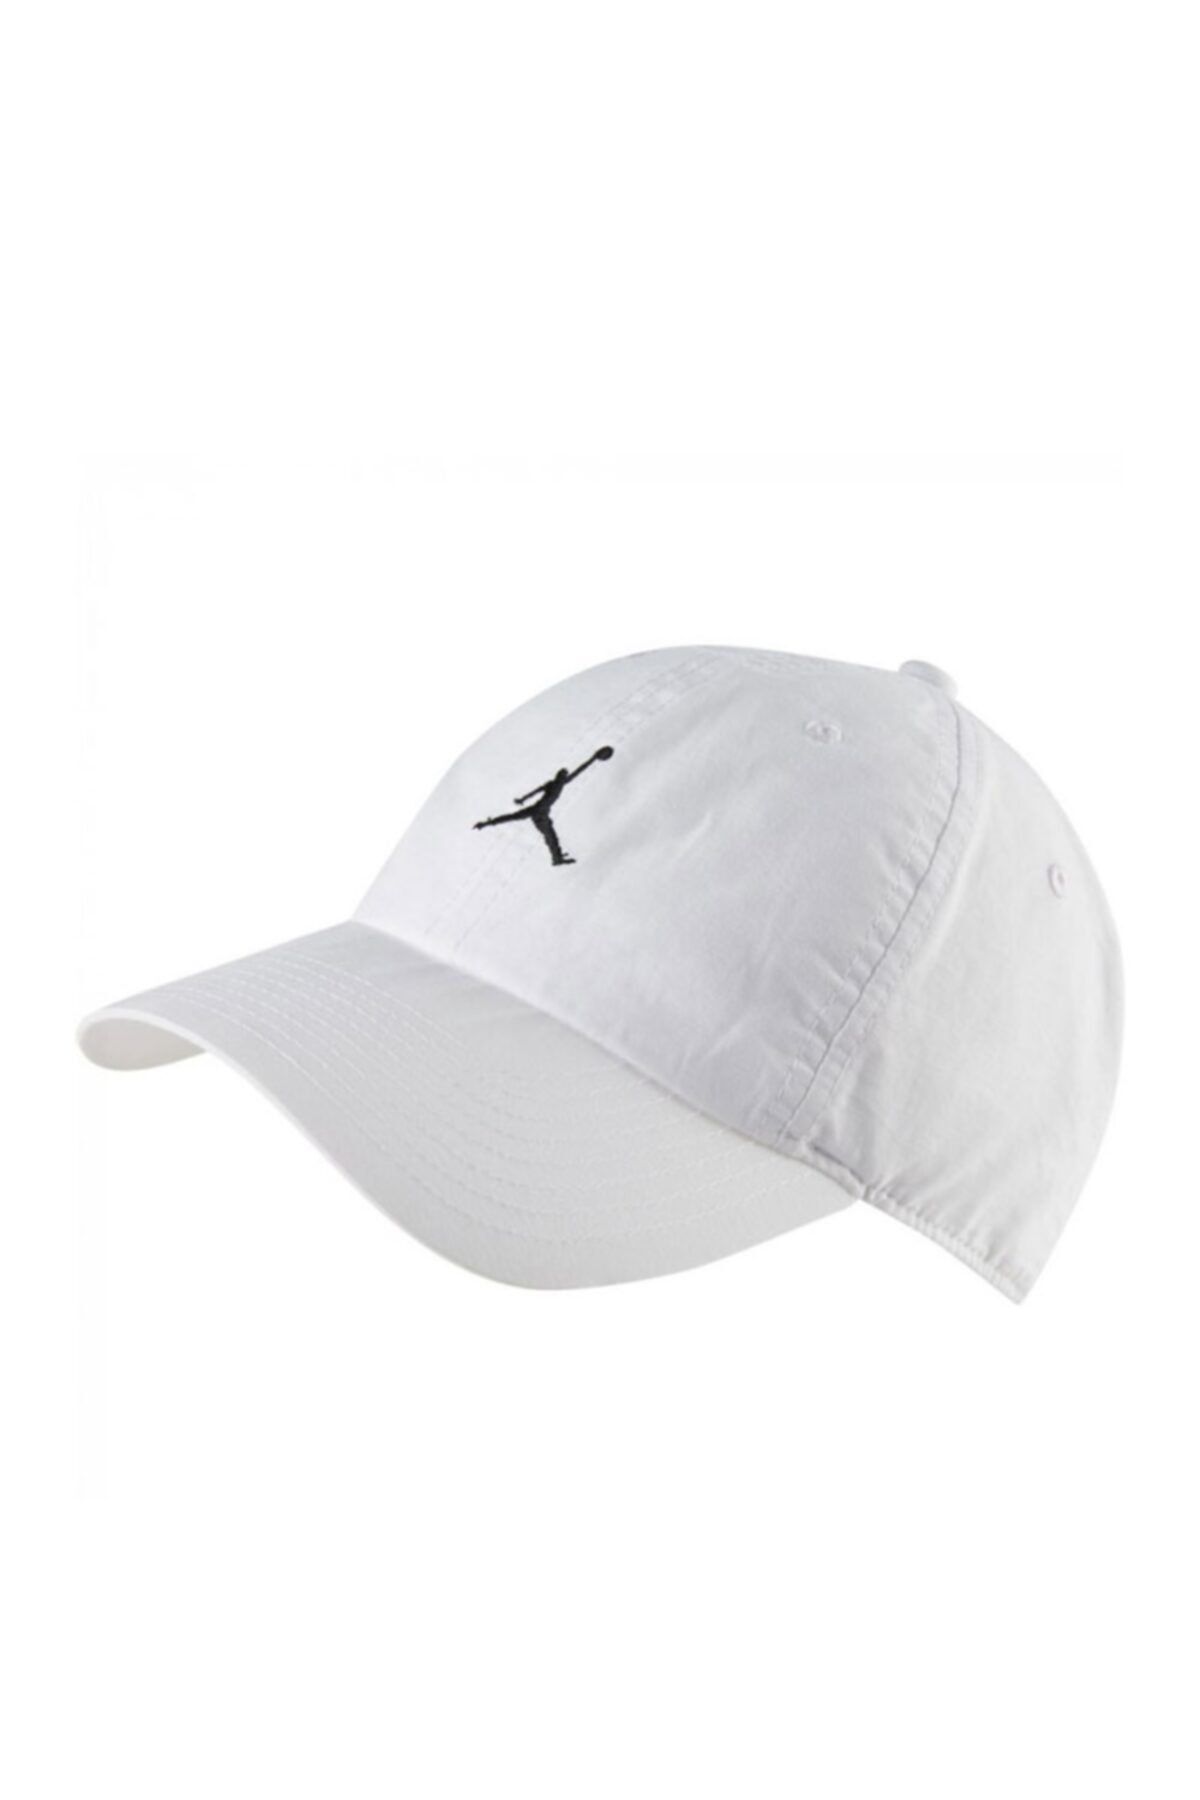 Nike Jordan H86 Jm Washed Cap Unisex Beyaz Şapka - Dc3673-100